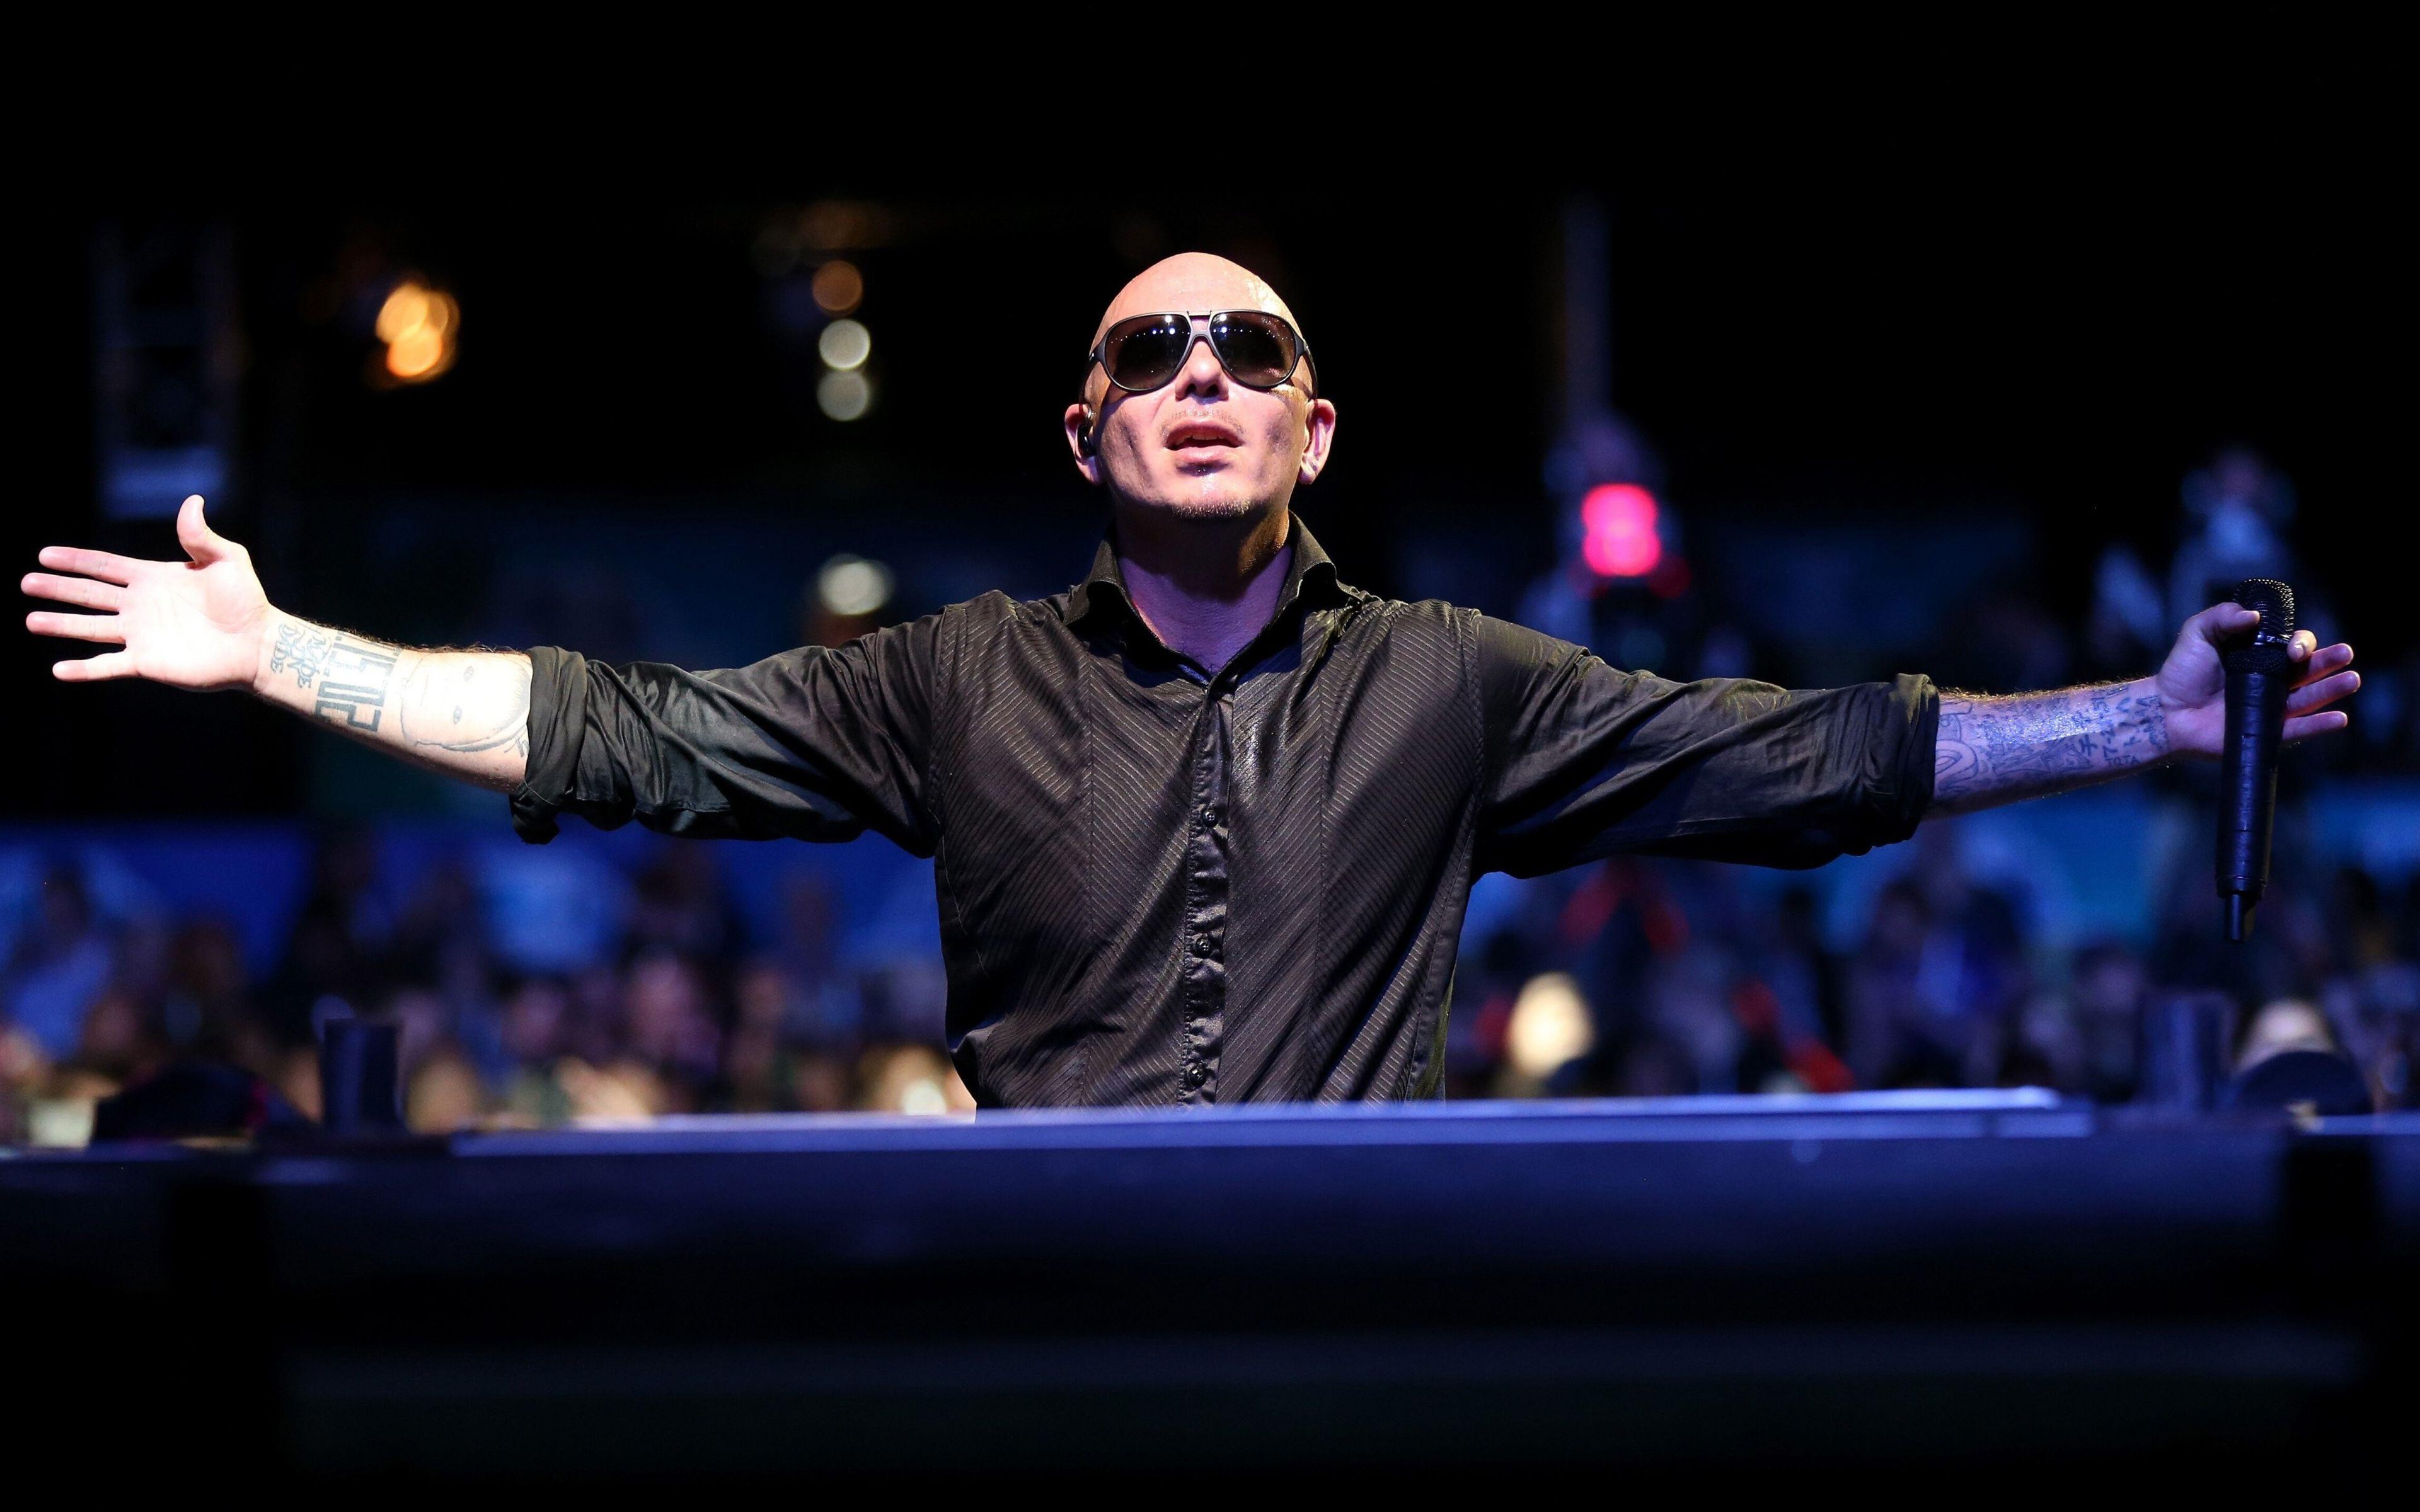 Download wallpaper Pitbull, 4k, american singer, superstars